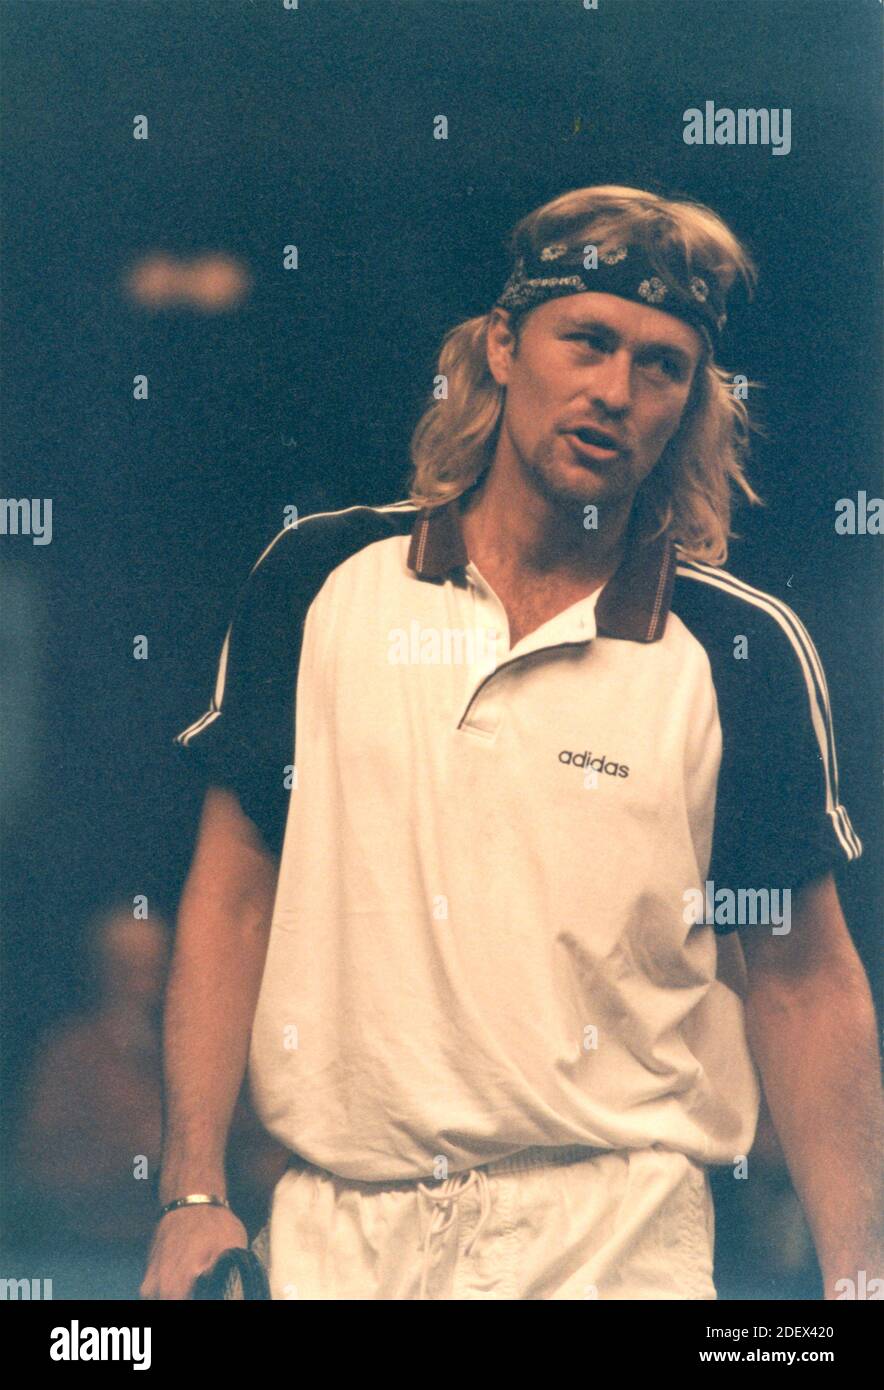 Jugador de tenis sudafricano Gary Muller, 1995 Foto de stock